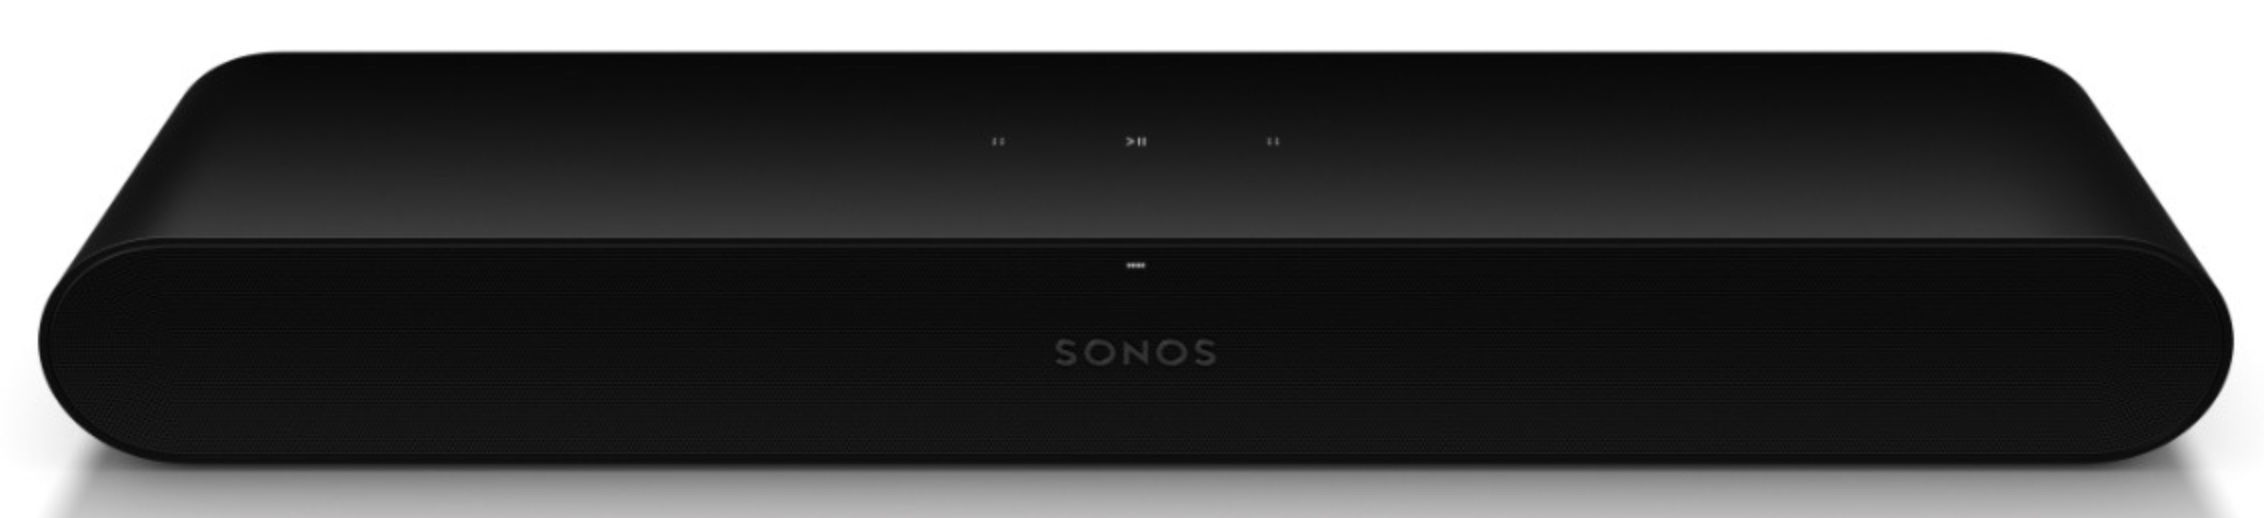 Sonos Ray   kompakte All in One Soundbar mit AirPlay für 299€ + 6 Monate Spotify Premium gratis